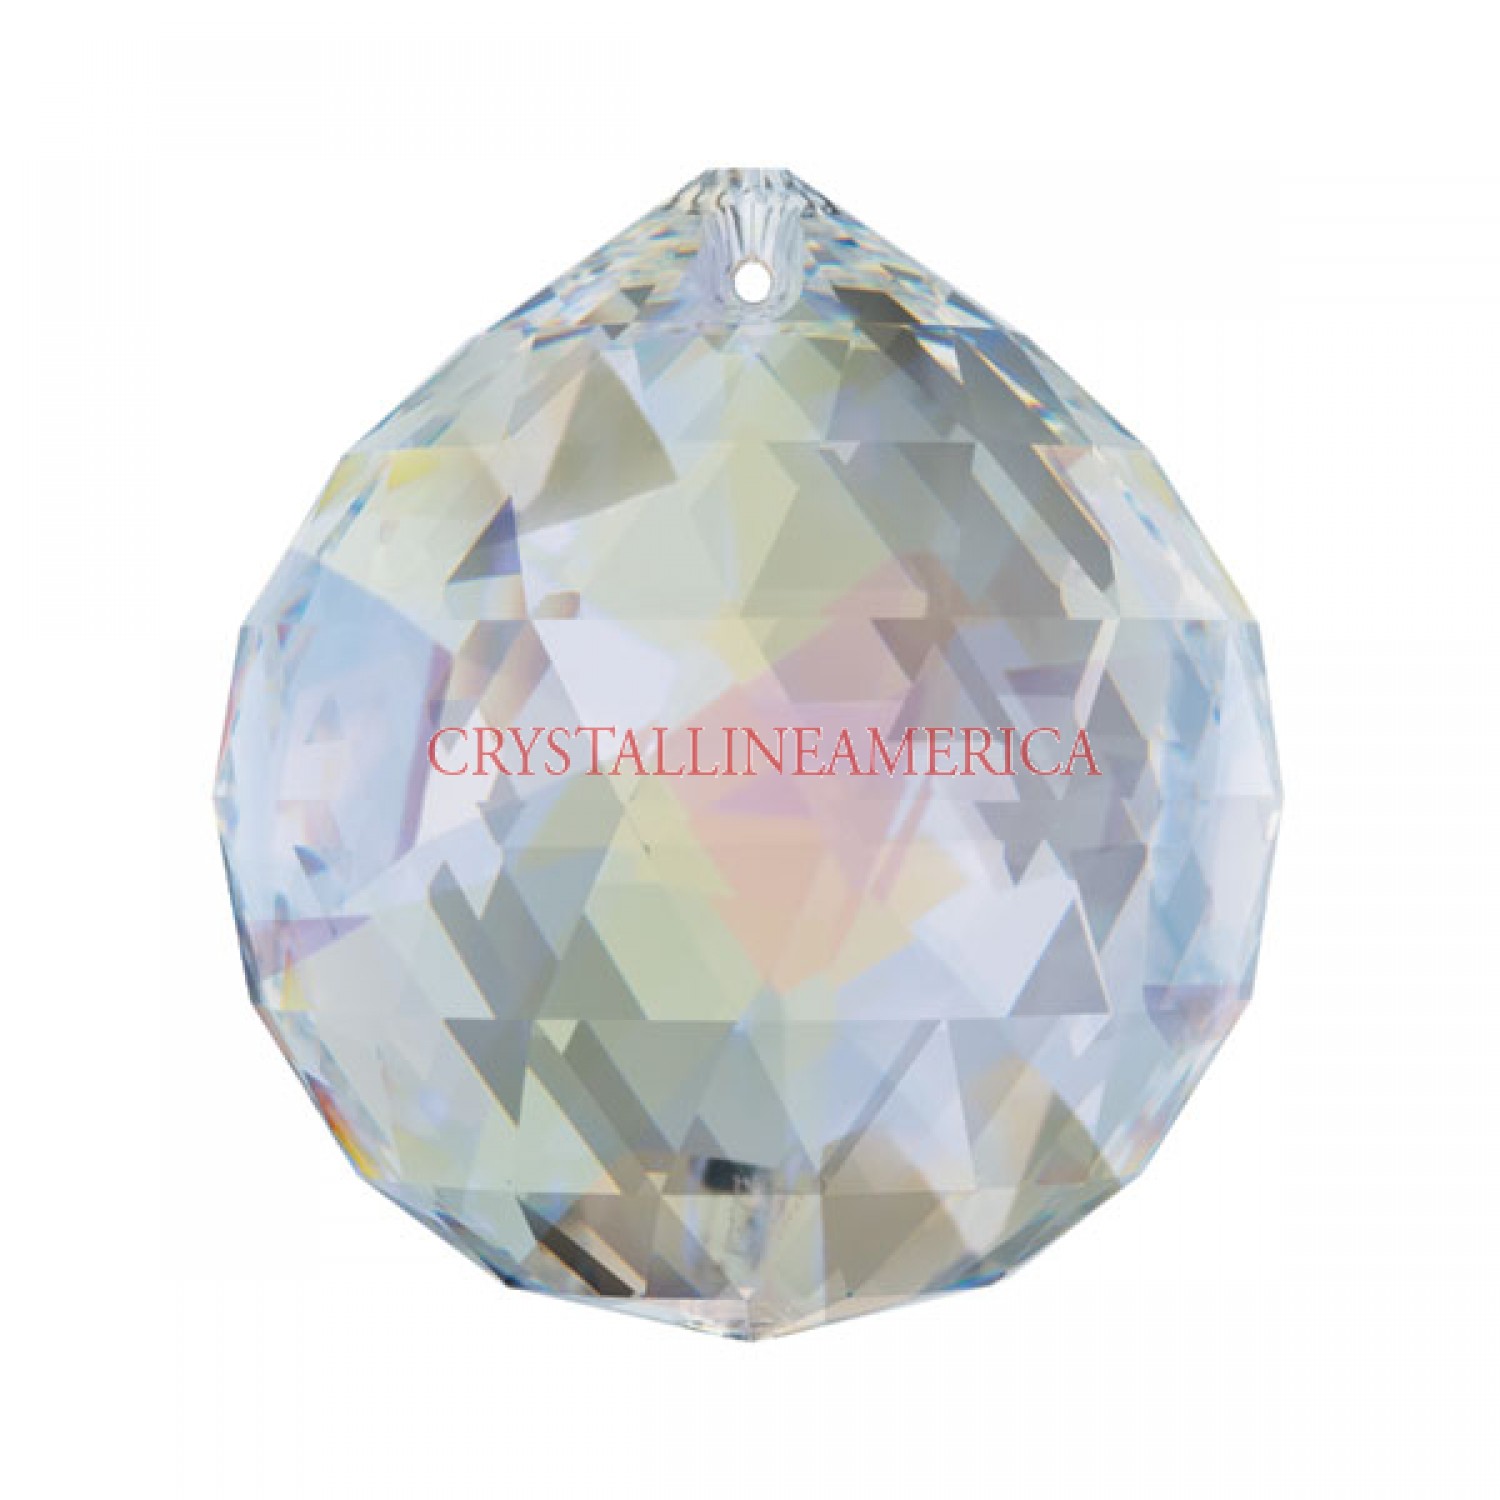 Swarovski Crystal Aurora Borealis Ball | Crystalline America